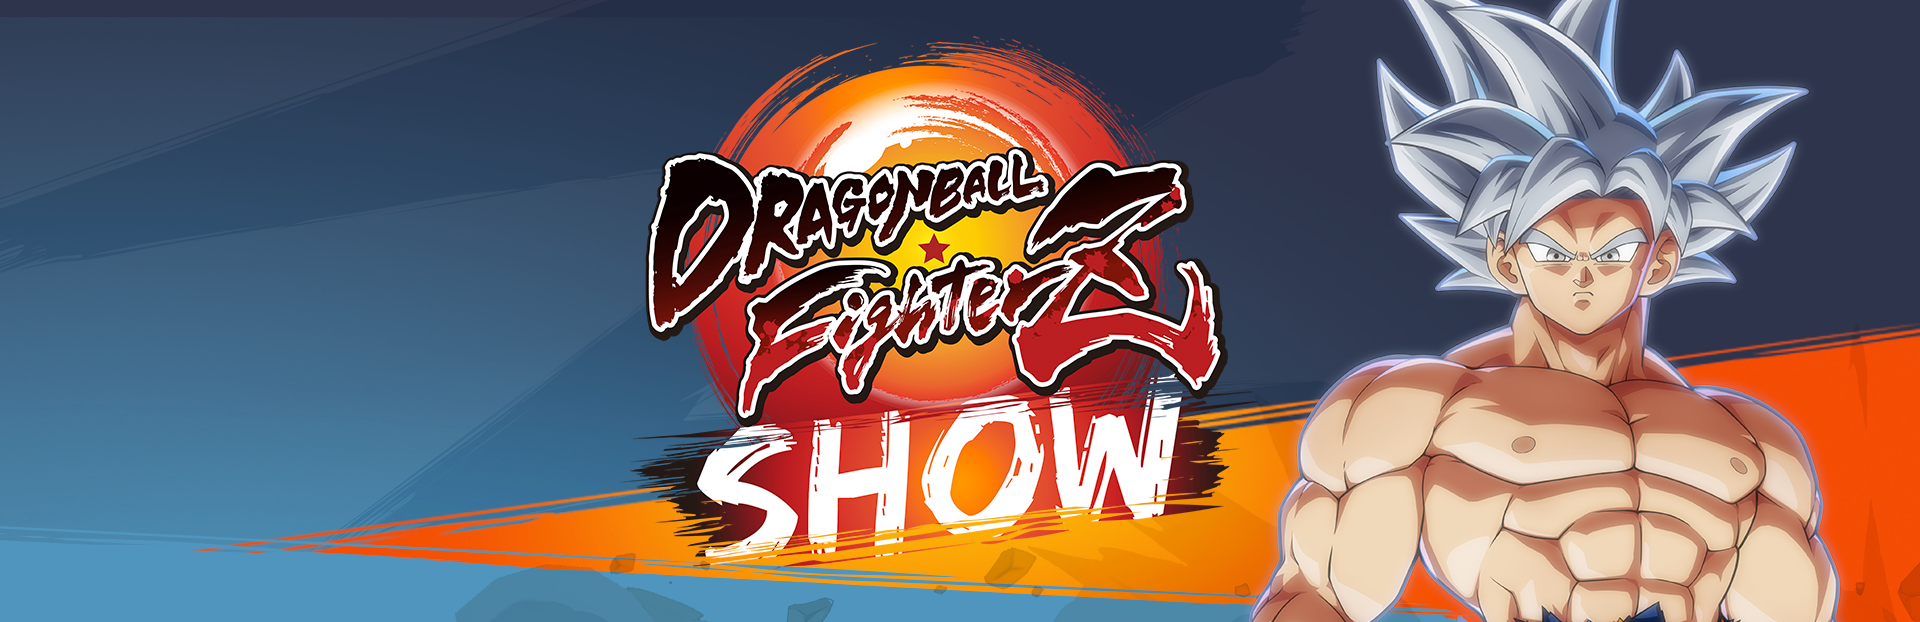 Super Dragon Ball Z/Android 17 - SuperCombo Wiki